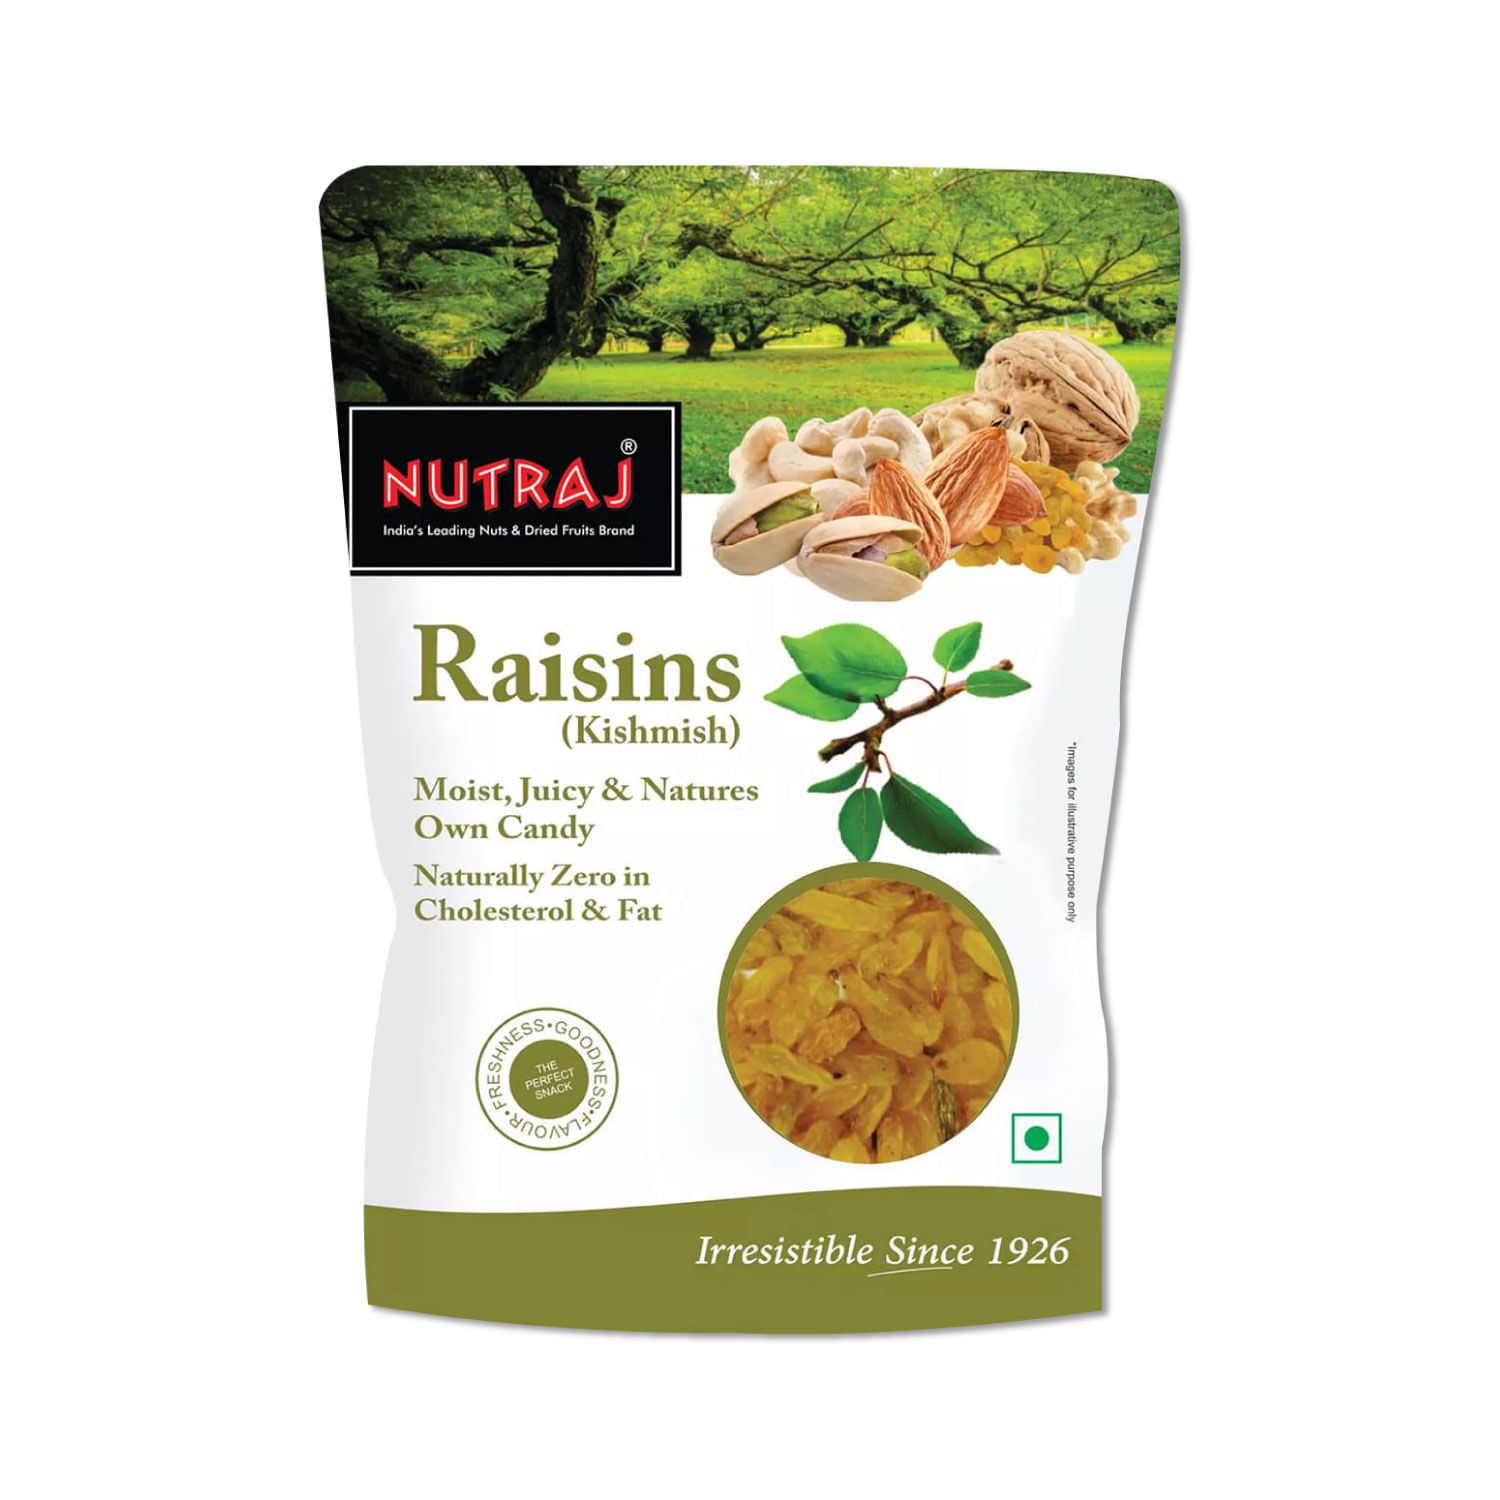 Nutraj Chironji Nuts 100g (Pack of 2) and Nutraj Super Raisin (500g) (Long)